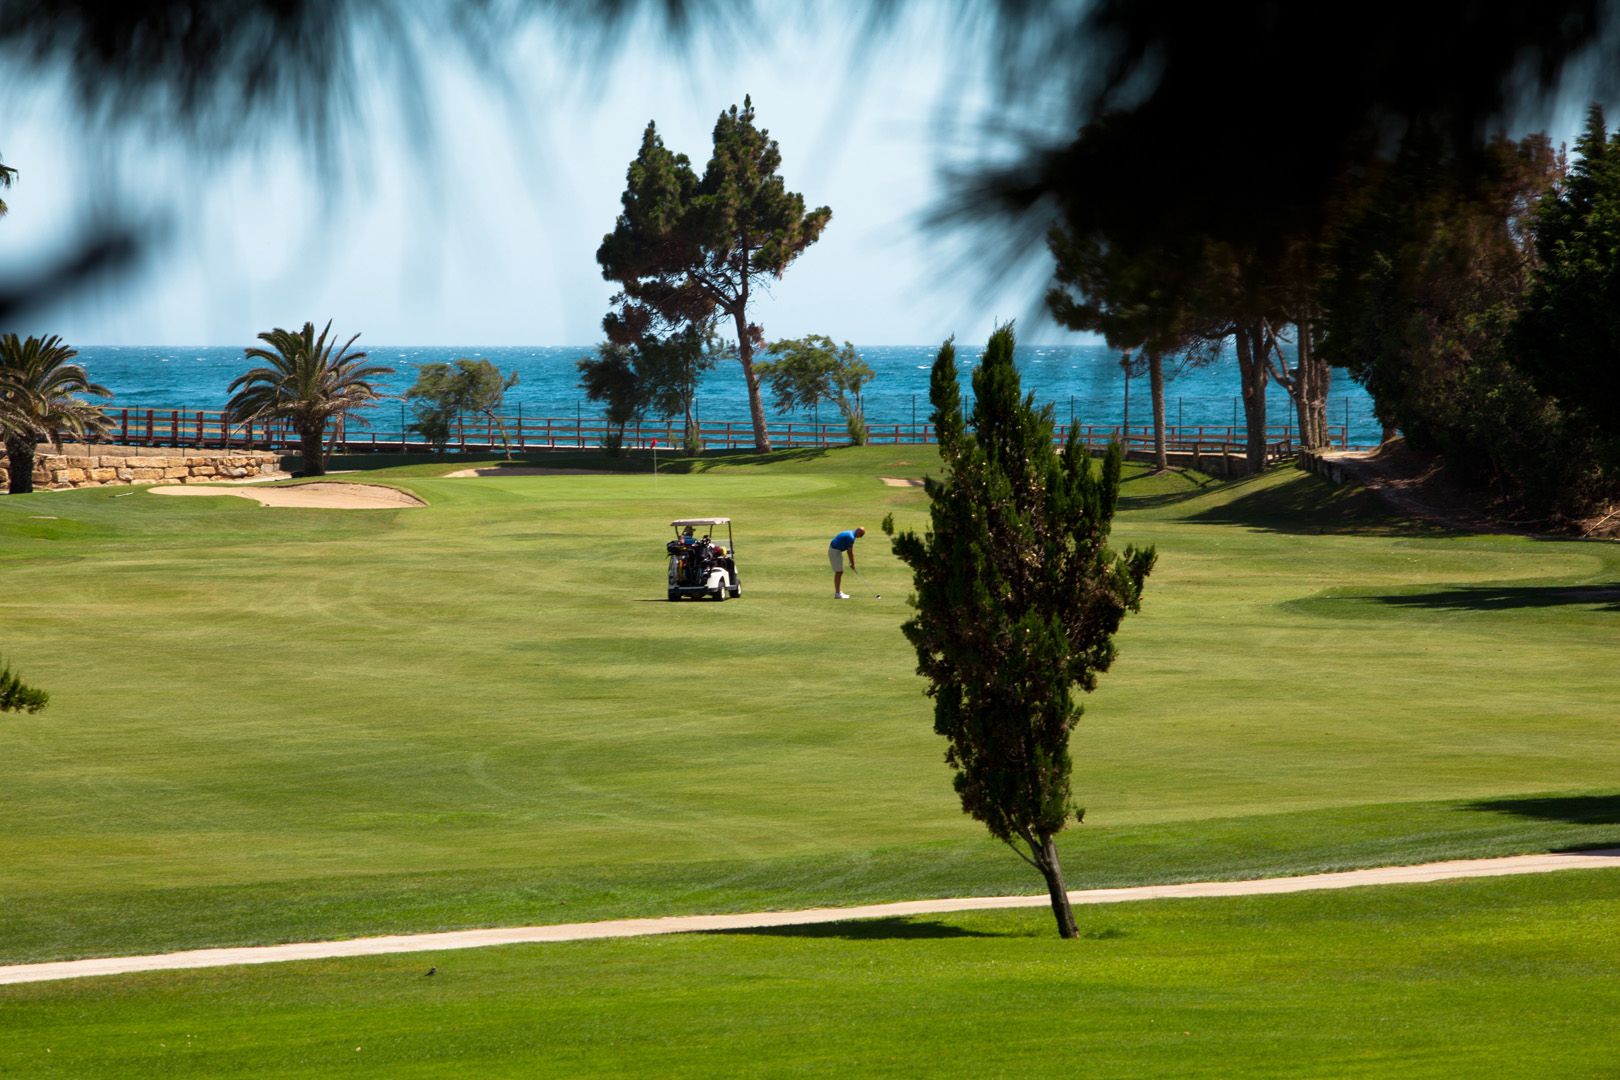 Artola Baja, Marbella, Malaga, Spain, beach holidays, marina, golf